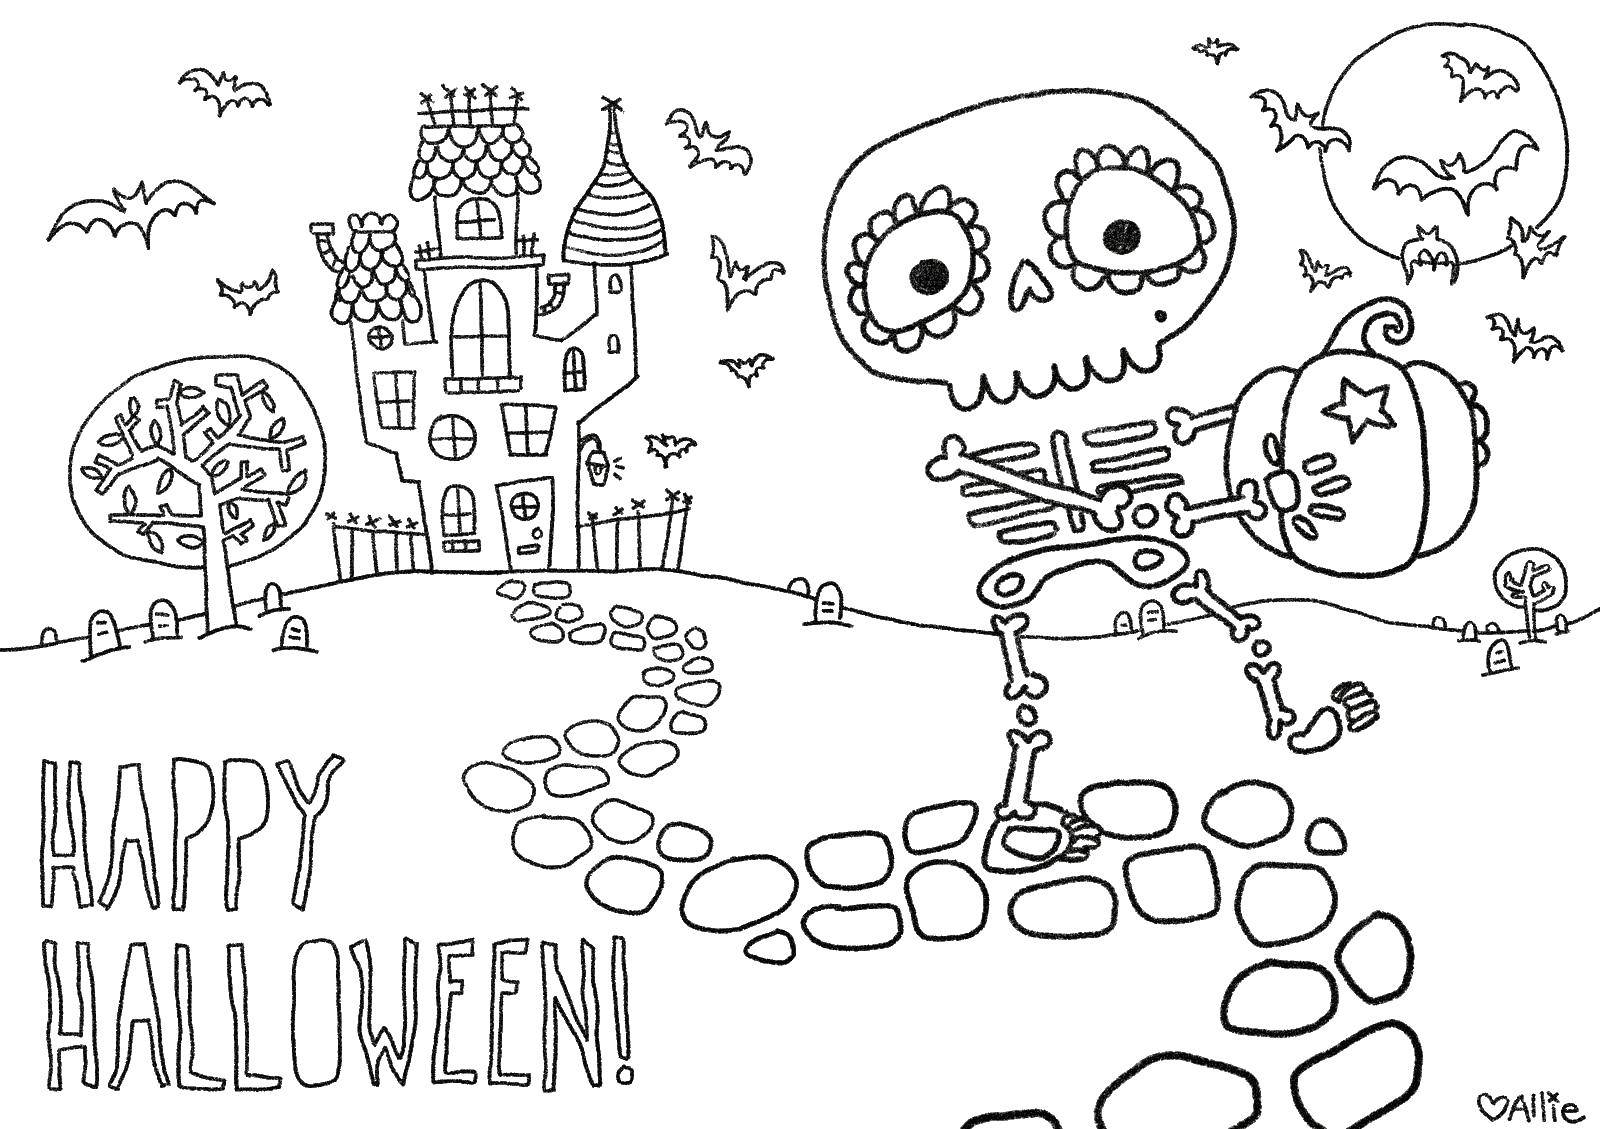 Coloring Halloween. Category Halloween. Tags:  Halloween, night, pumpkin, fear.